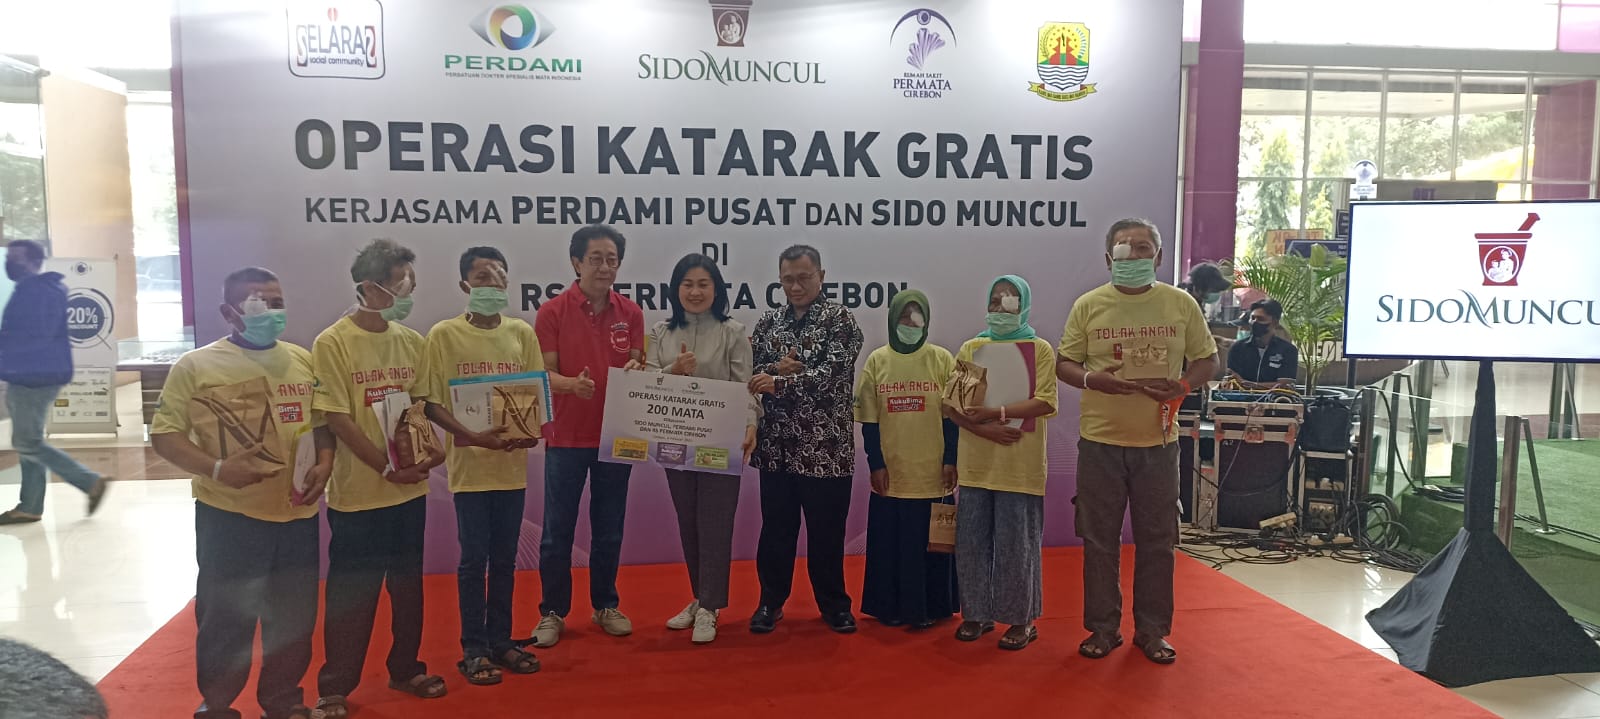 BAKSOS: RS Permata Cirebon menggelar bakti sosial operasi katarak gratis, bekerjasama dengan Perdami Pusat dan PT Sido Muncul di RS setempat, Sabtu-Minggu (4-5/2/2023). --FOTO: ADE GUSTIANA/RADAR CIREBON